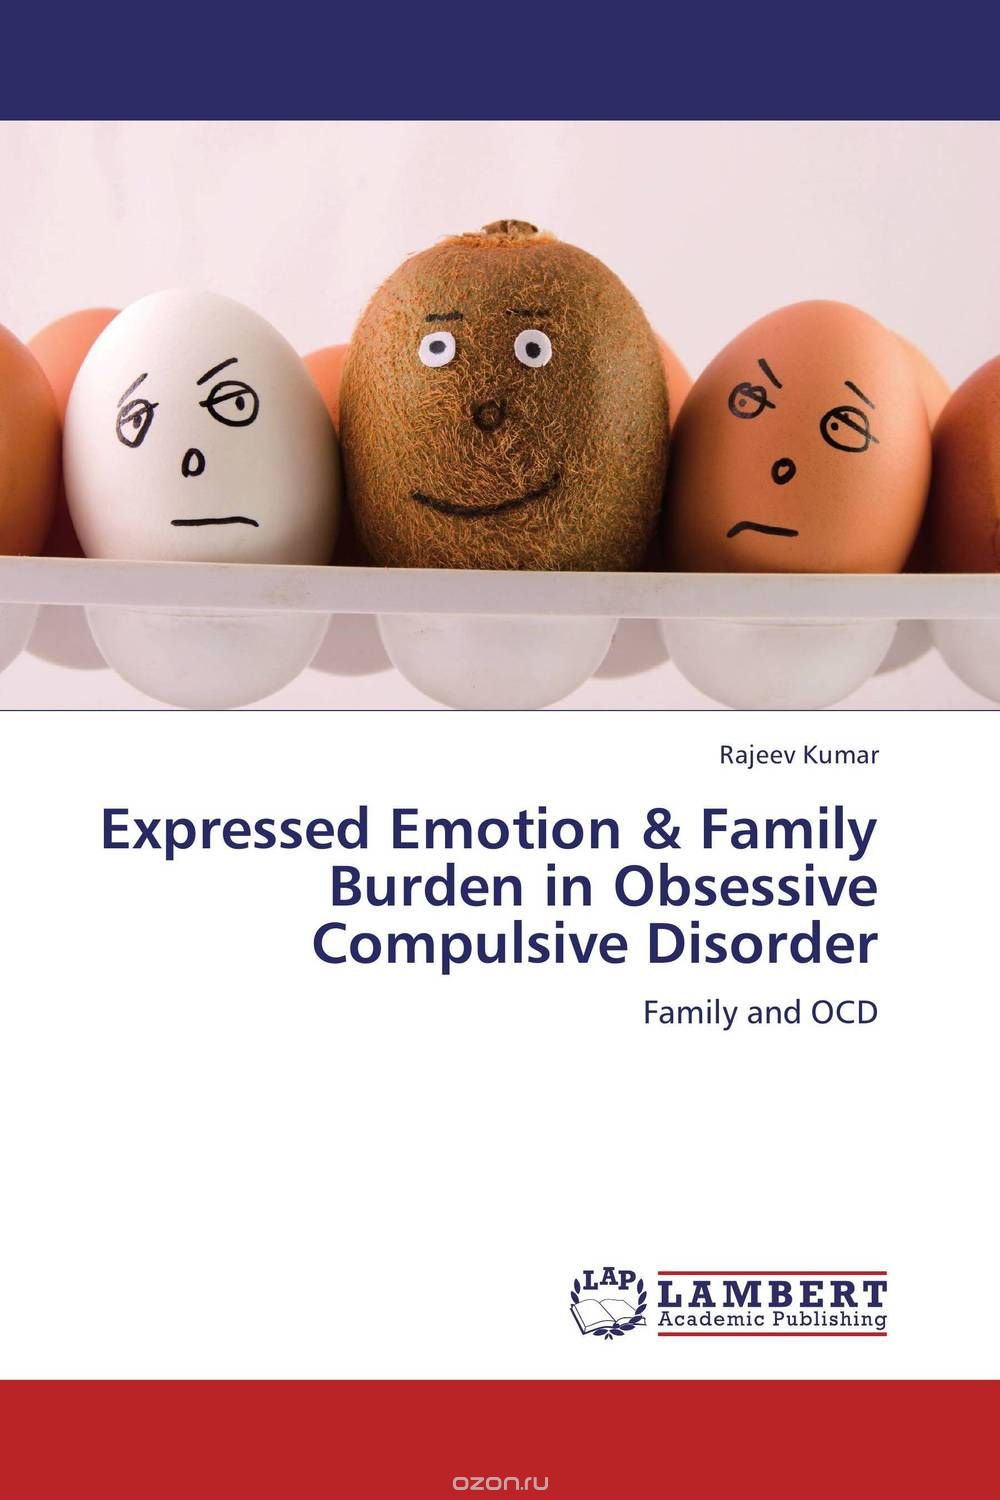 Скачать книгу "Expressed Emotion & Family Burden in  Obsessive Compulsive Disorder"